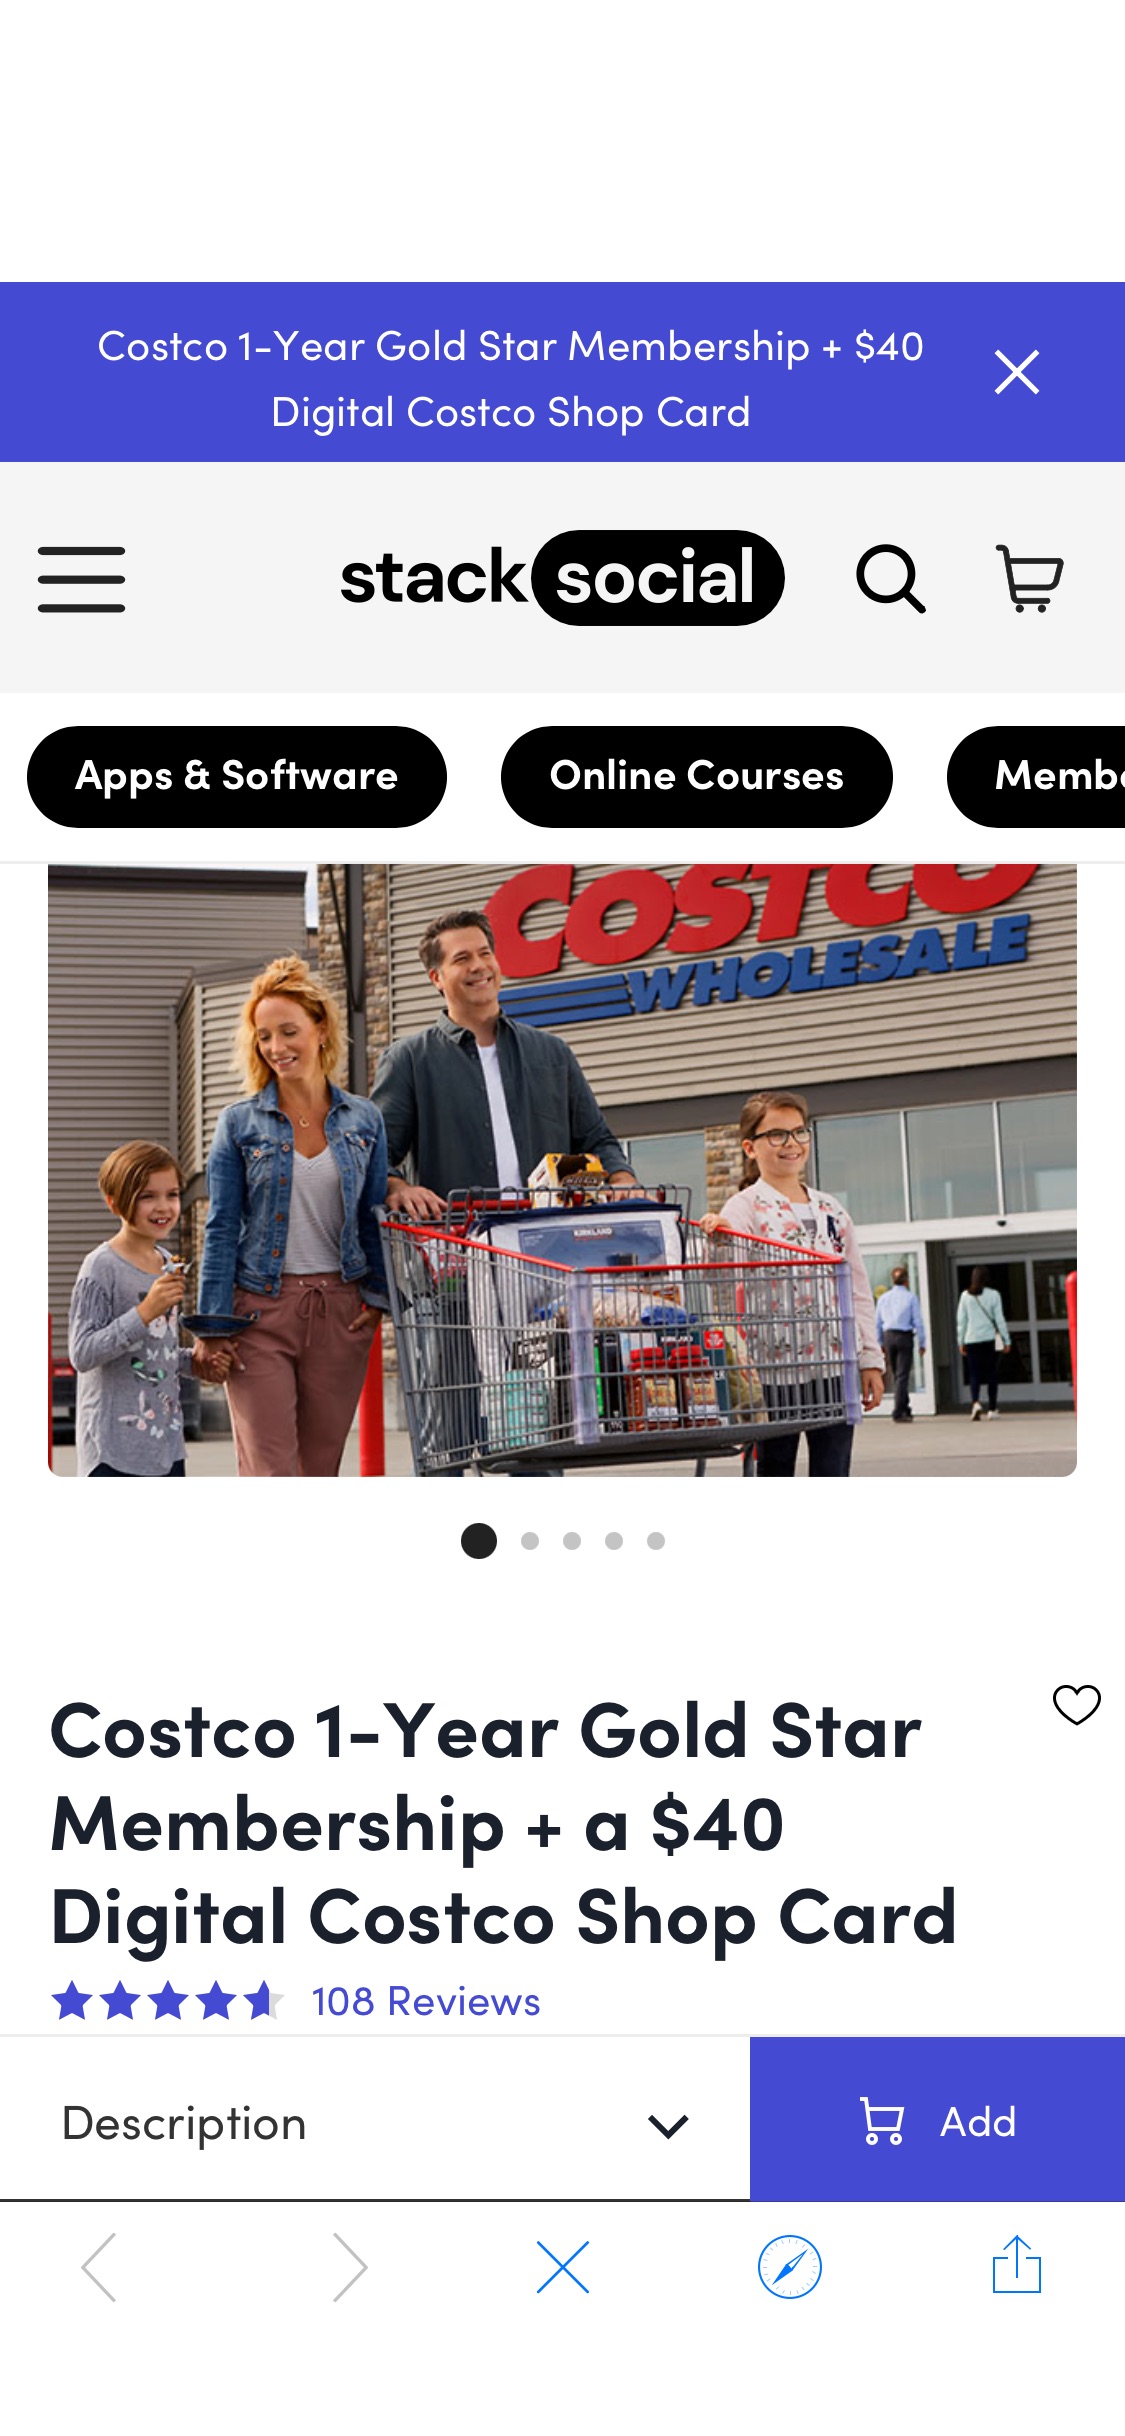 Costco 1-Year Gold Star Membership + a $40 Digital Costco Shop Card